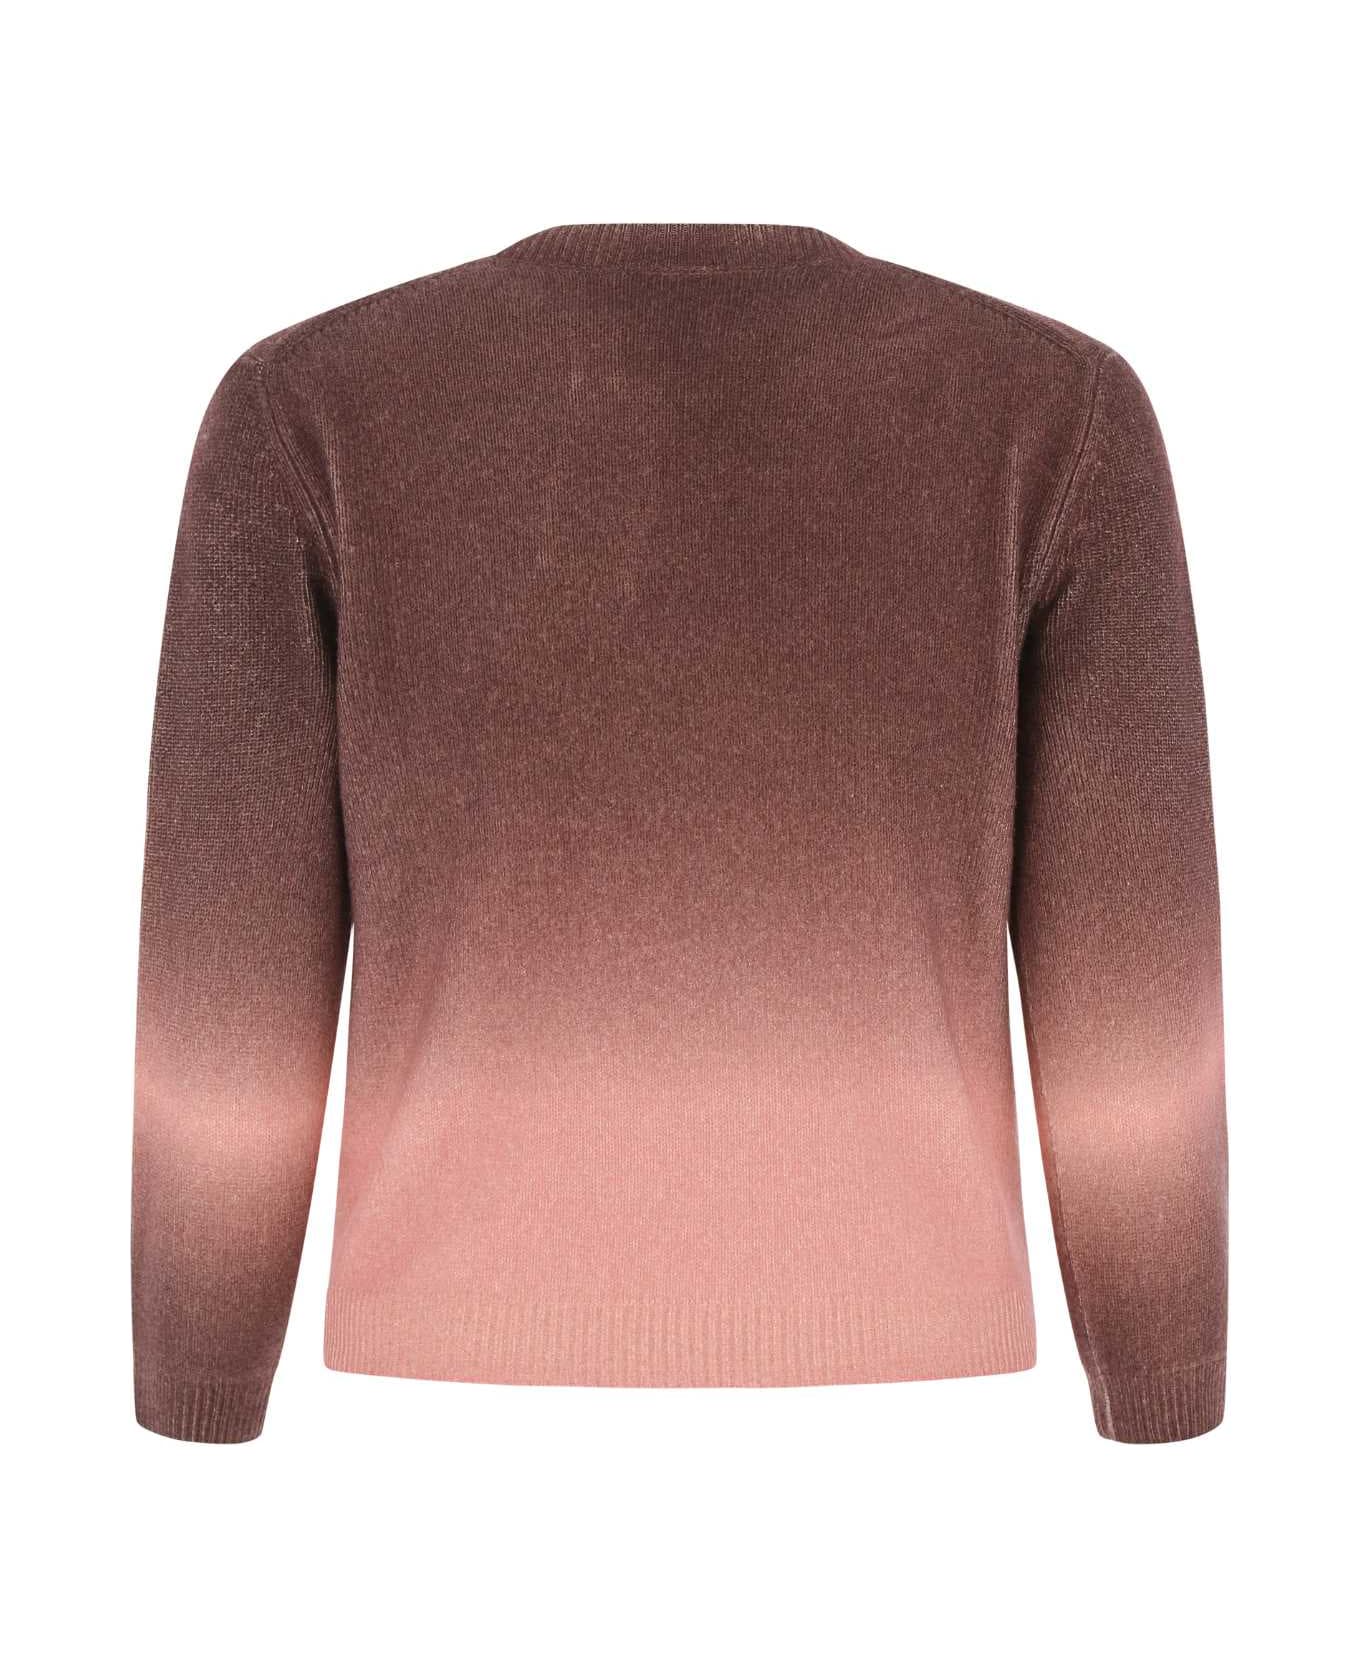 Tory Burch Multicolor Cashmere Sweater - 651